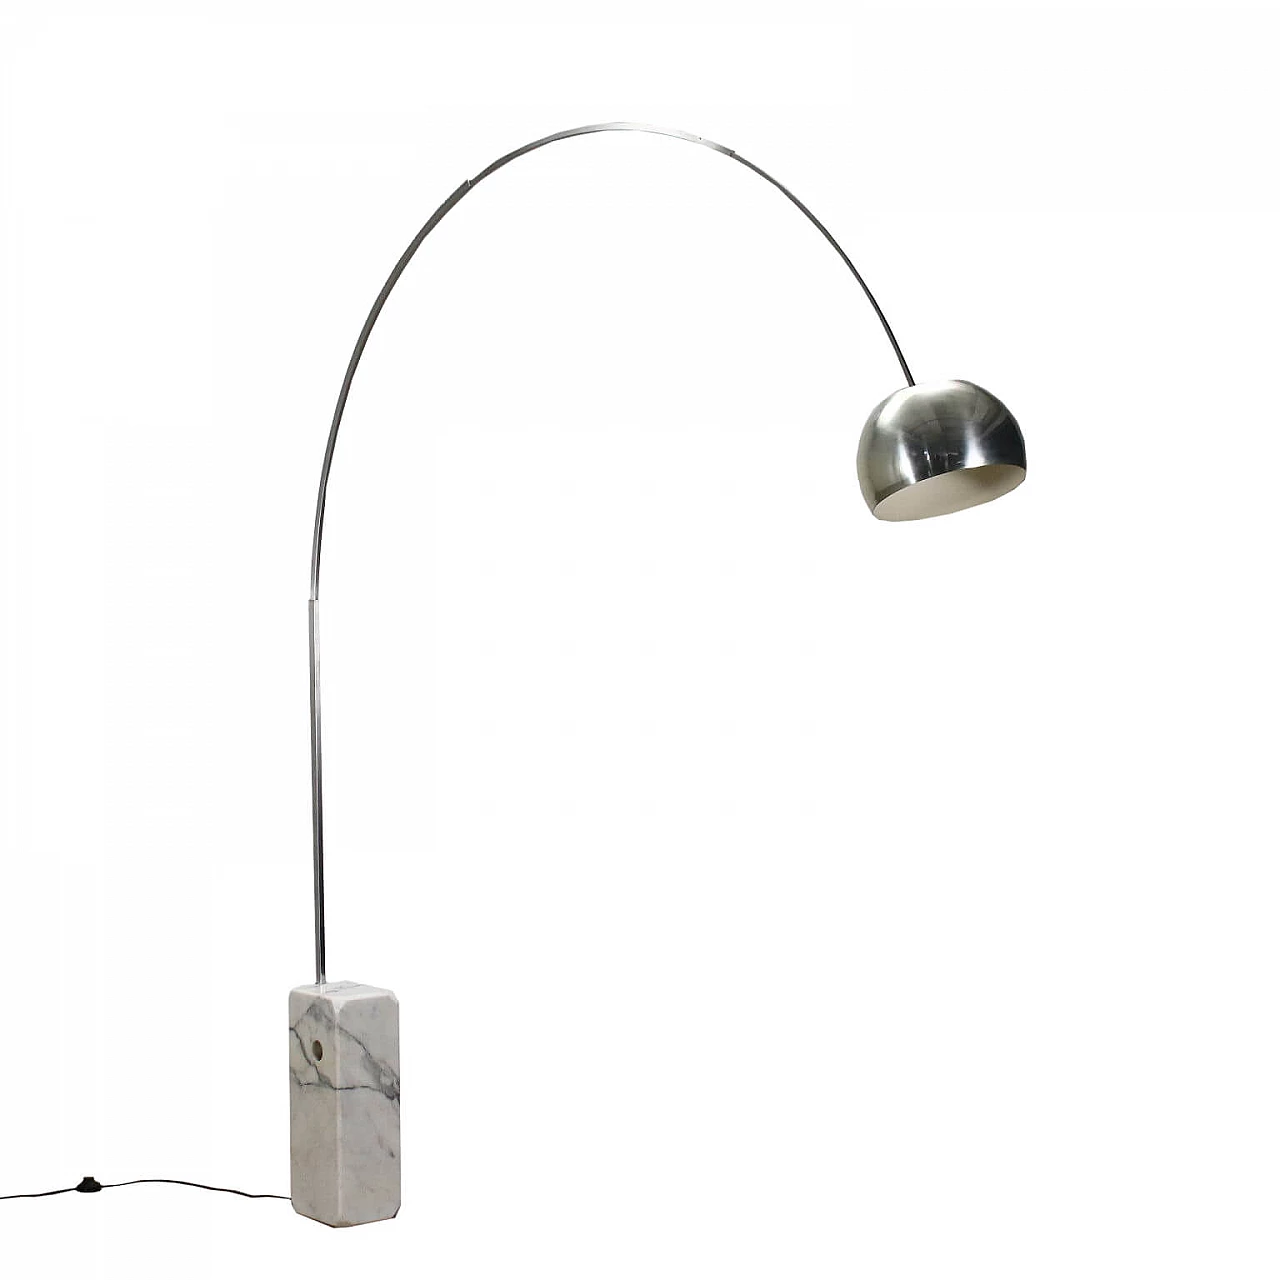 'Arco' lamp Achille and Pier Giacomo Castiglioni for Flos 1433702